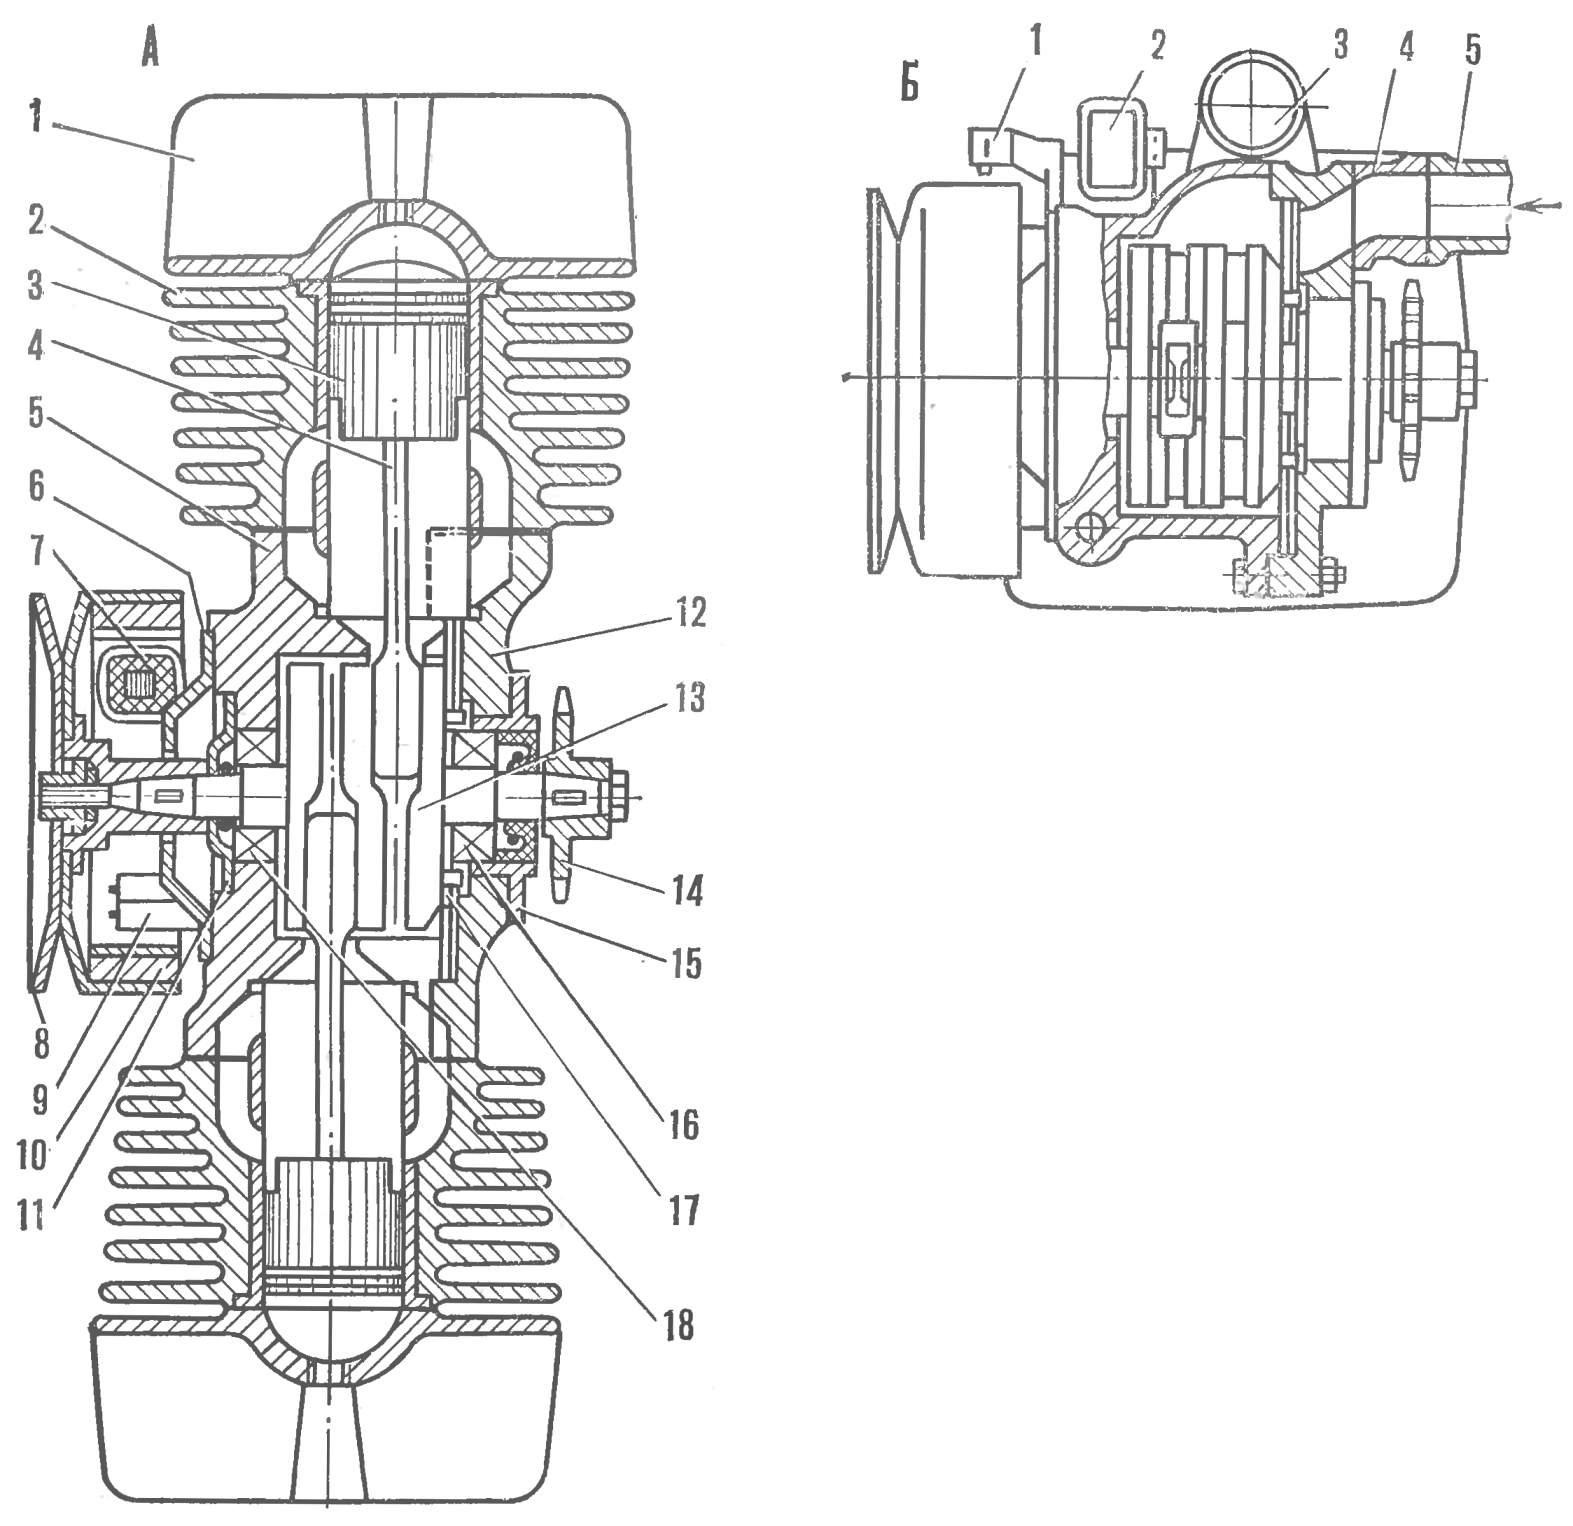 Fig. 4. Layout engine AG-2